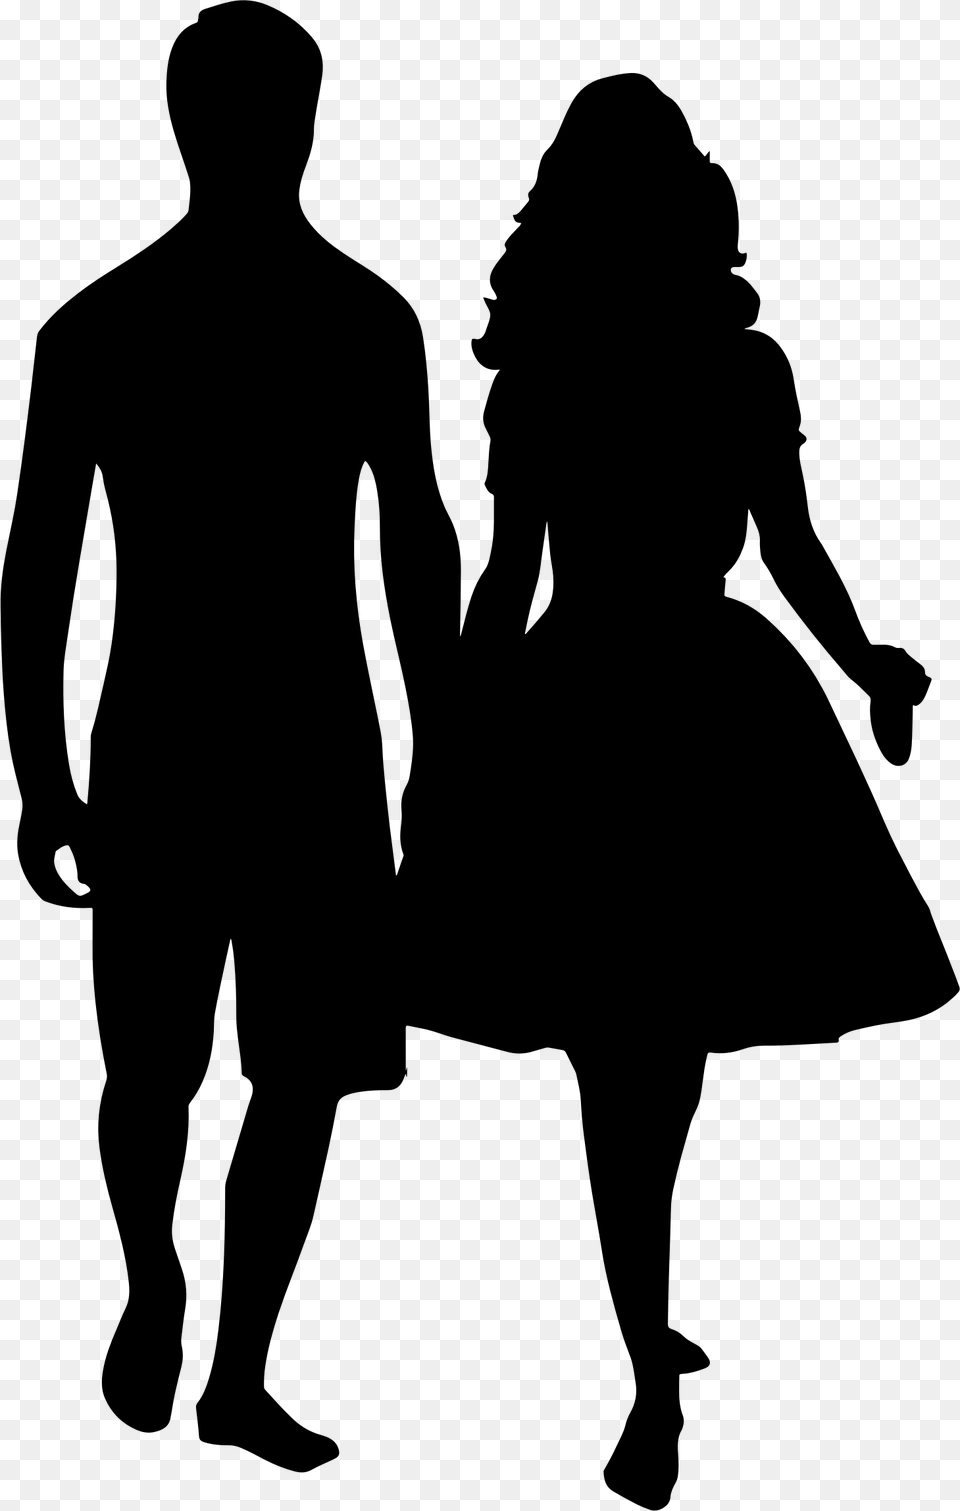 Holding Hands Silhouette Couple Clip Art Man And Woman Holding Hands Silhouette, Gray Free Png